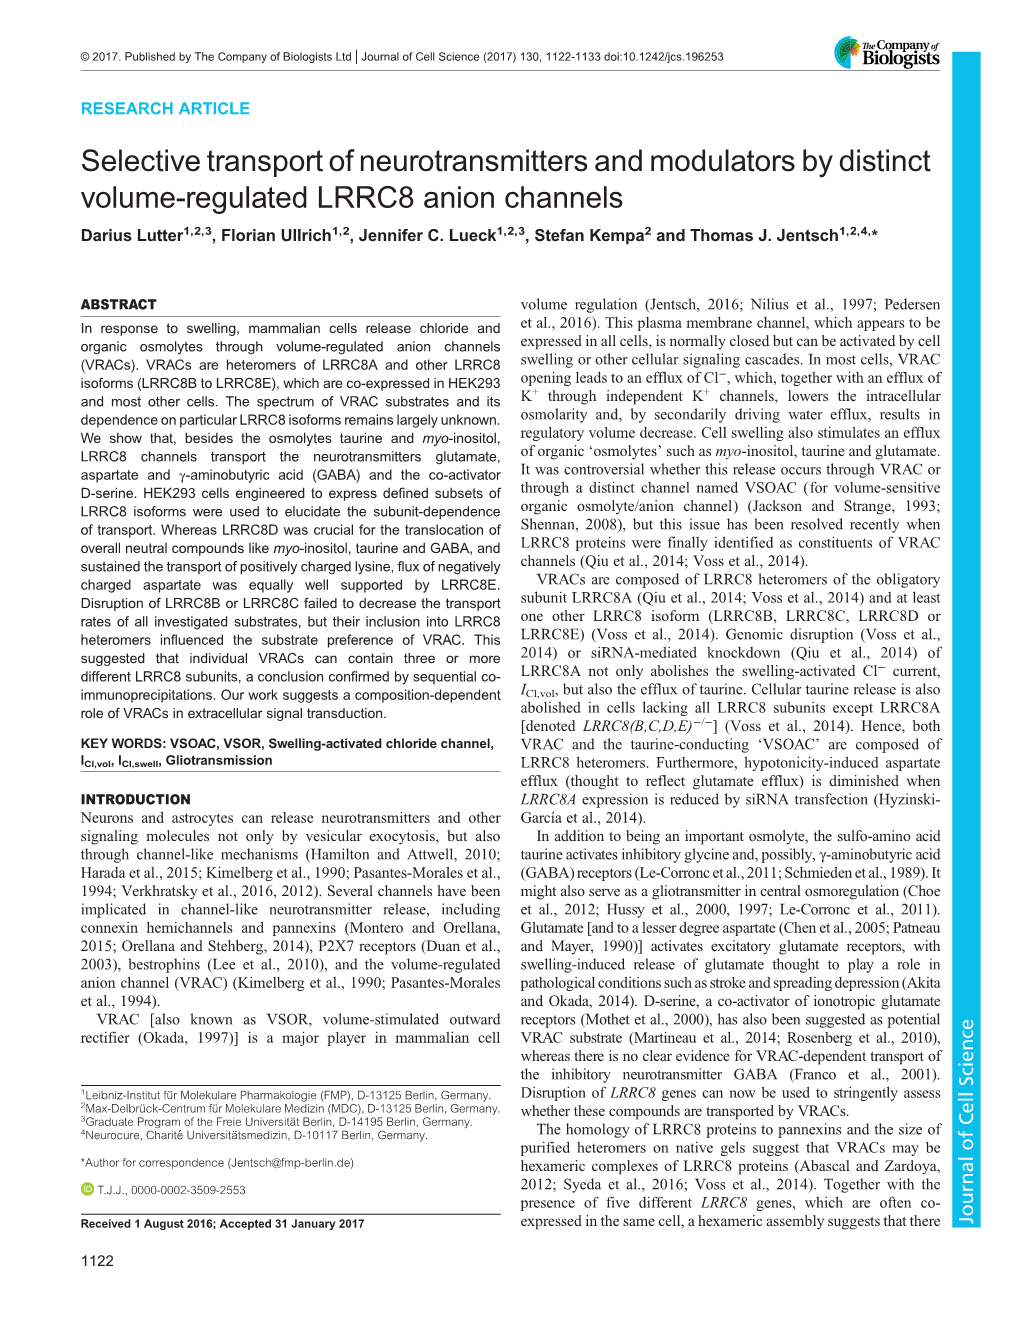 Selective Transport of Neurotransmitters and Modulators by Distinct Volume-Regulated LRRC8 Anion Channels Darius Lutter1,2,3, Florian Ullrich1,2, Jennifer C